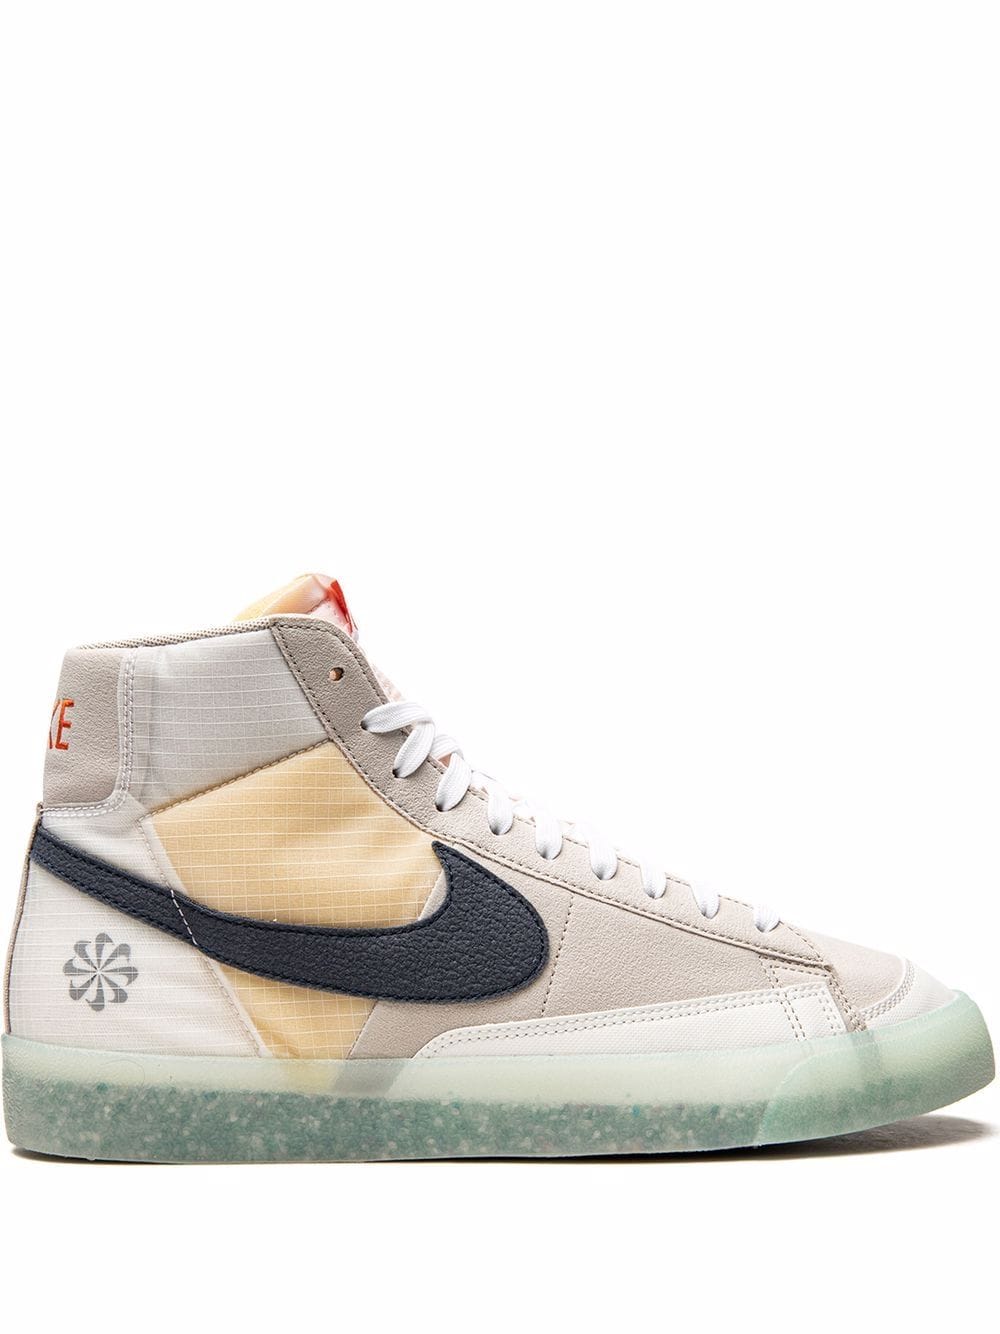 Image 1 of Nike "Blazer Mid '77 ""Glaciar Ice"" sneakers"